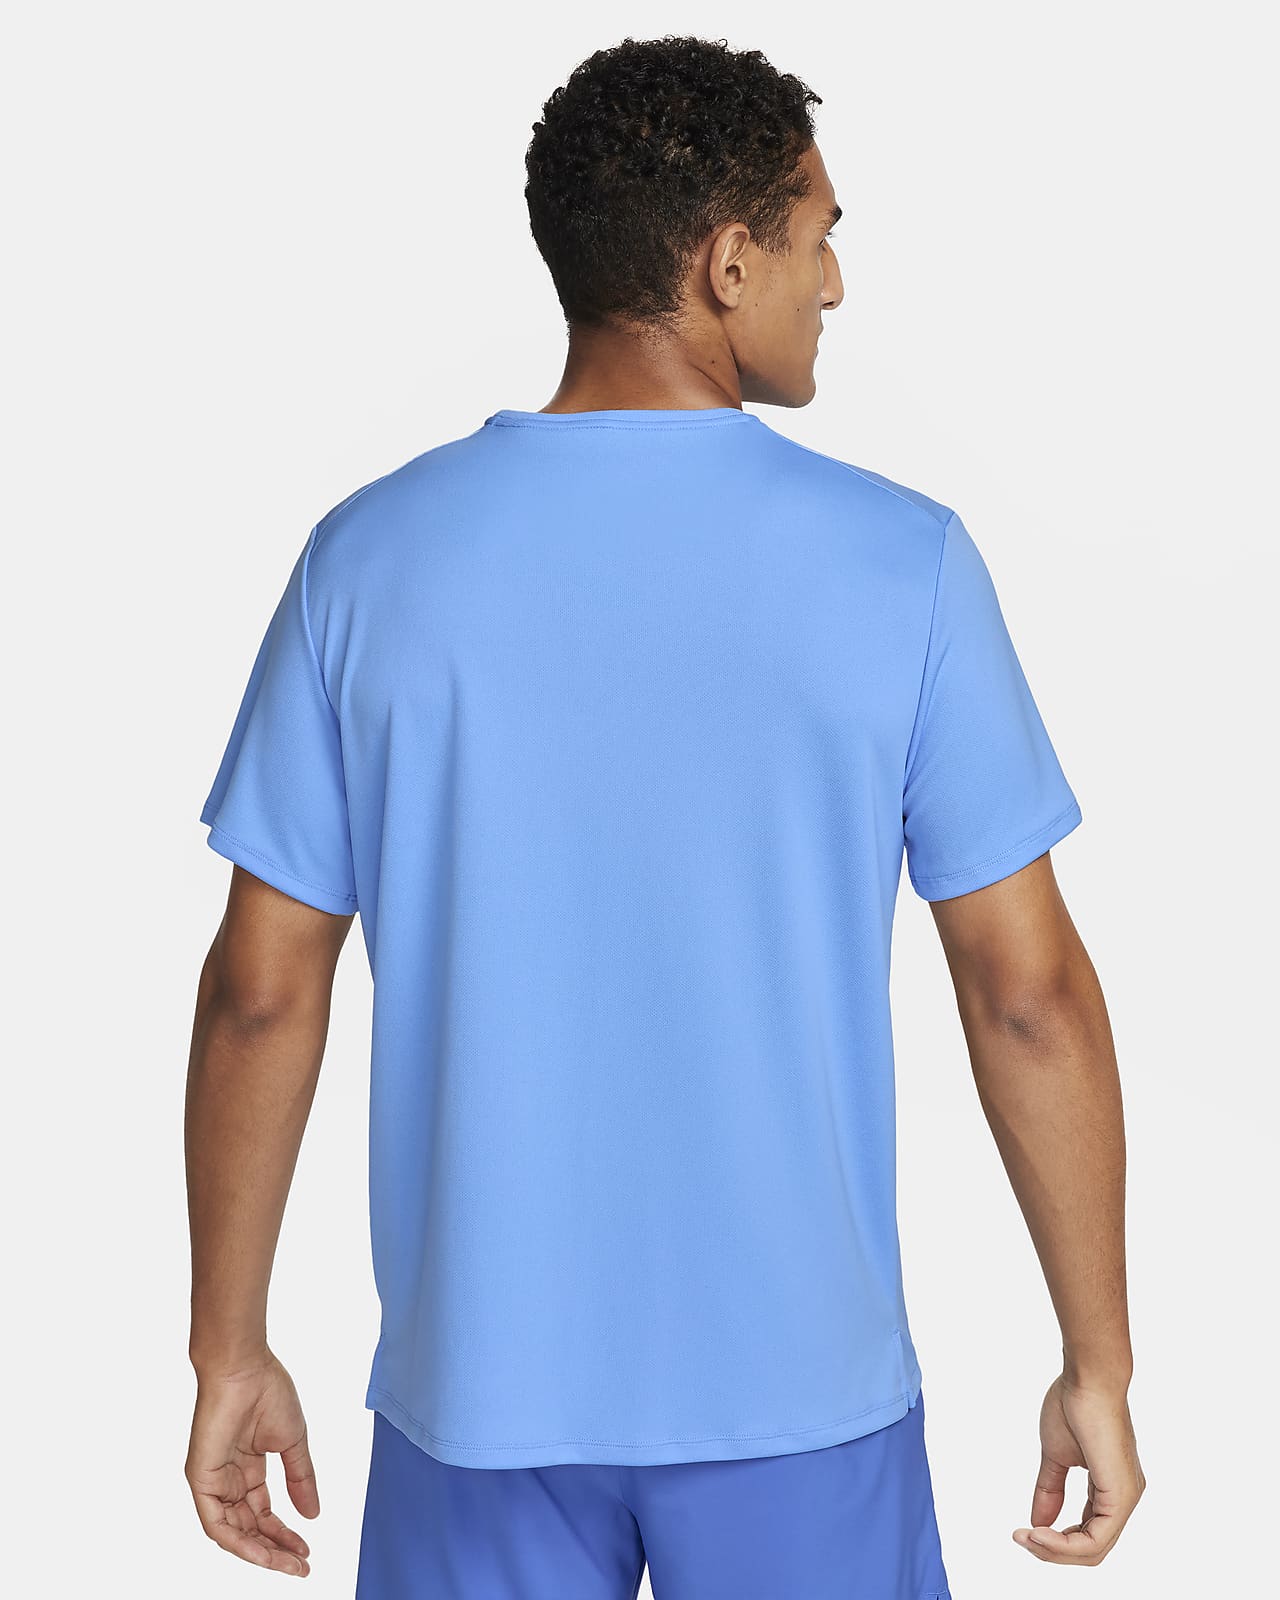 Nike Miler set Beige - t-shirt and shorts